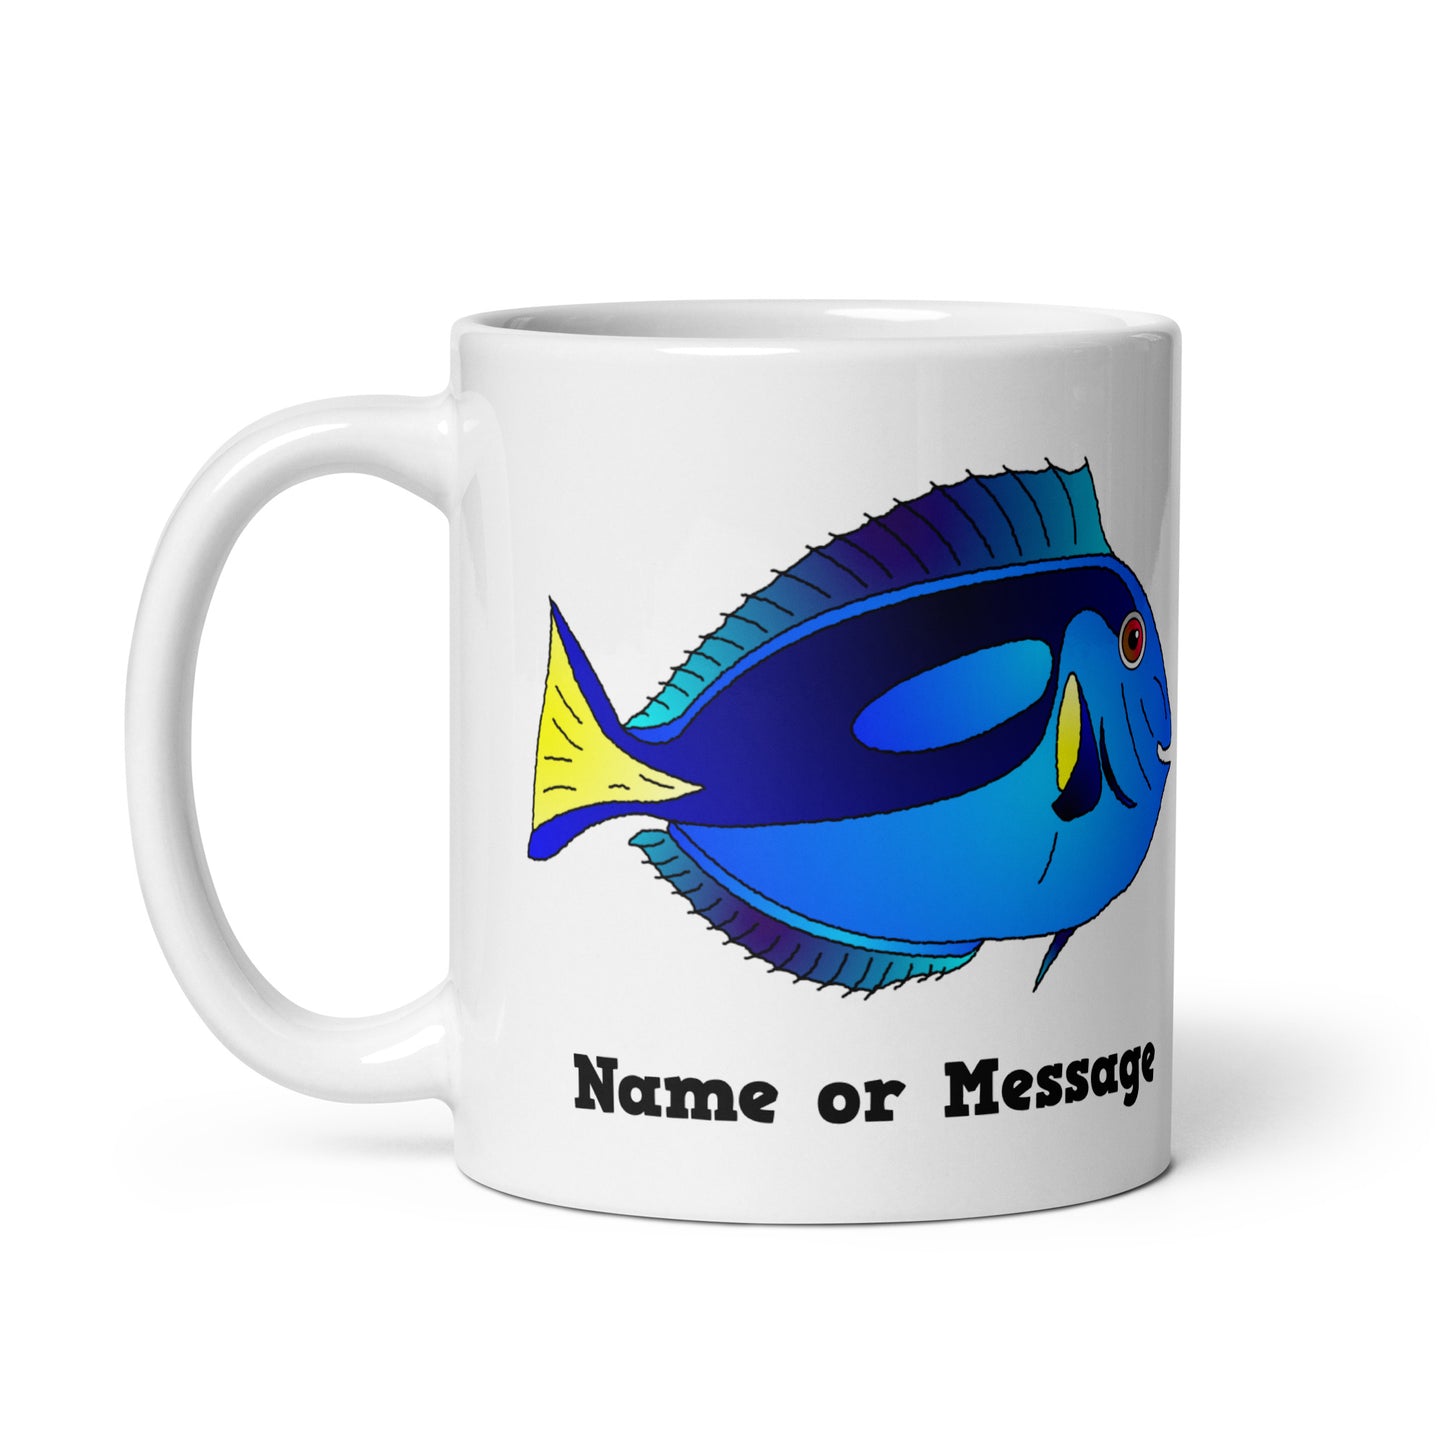 Personalized Blue Fish Mug